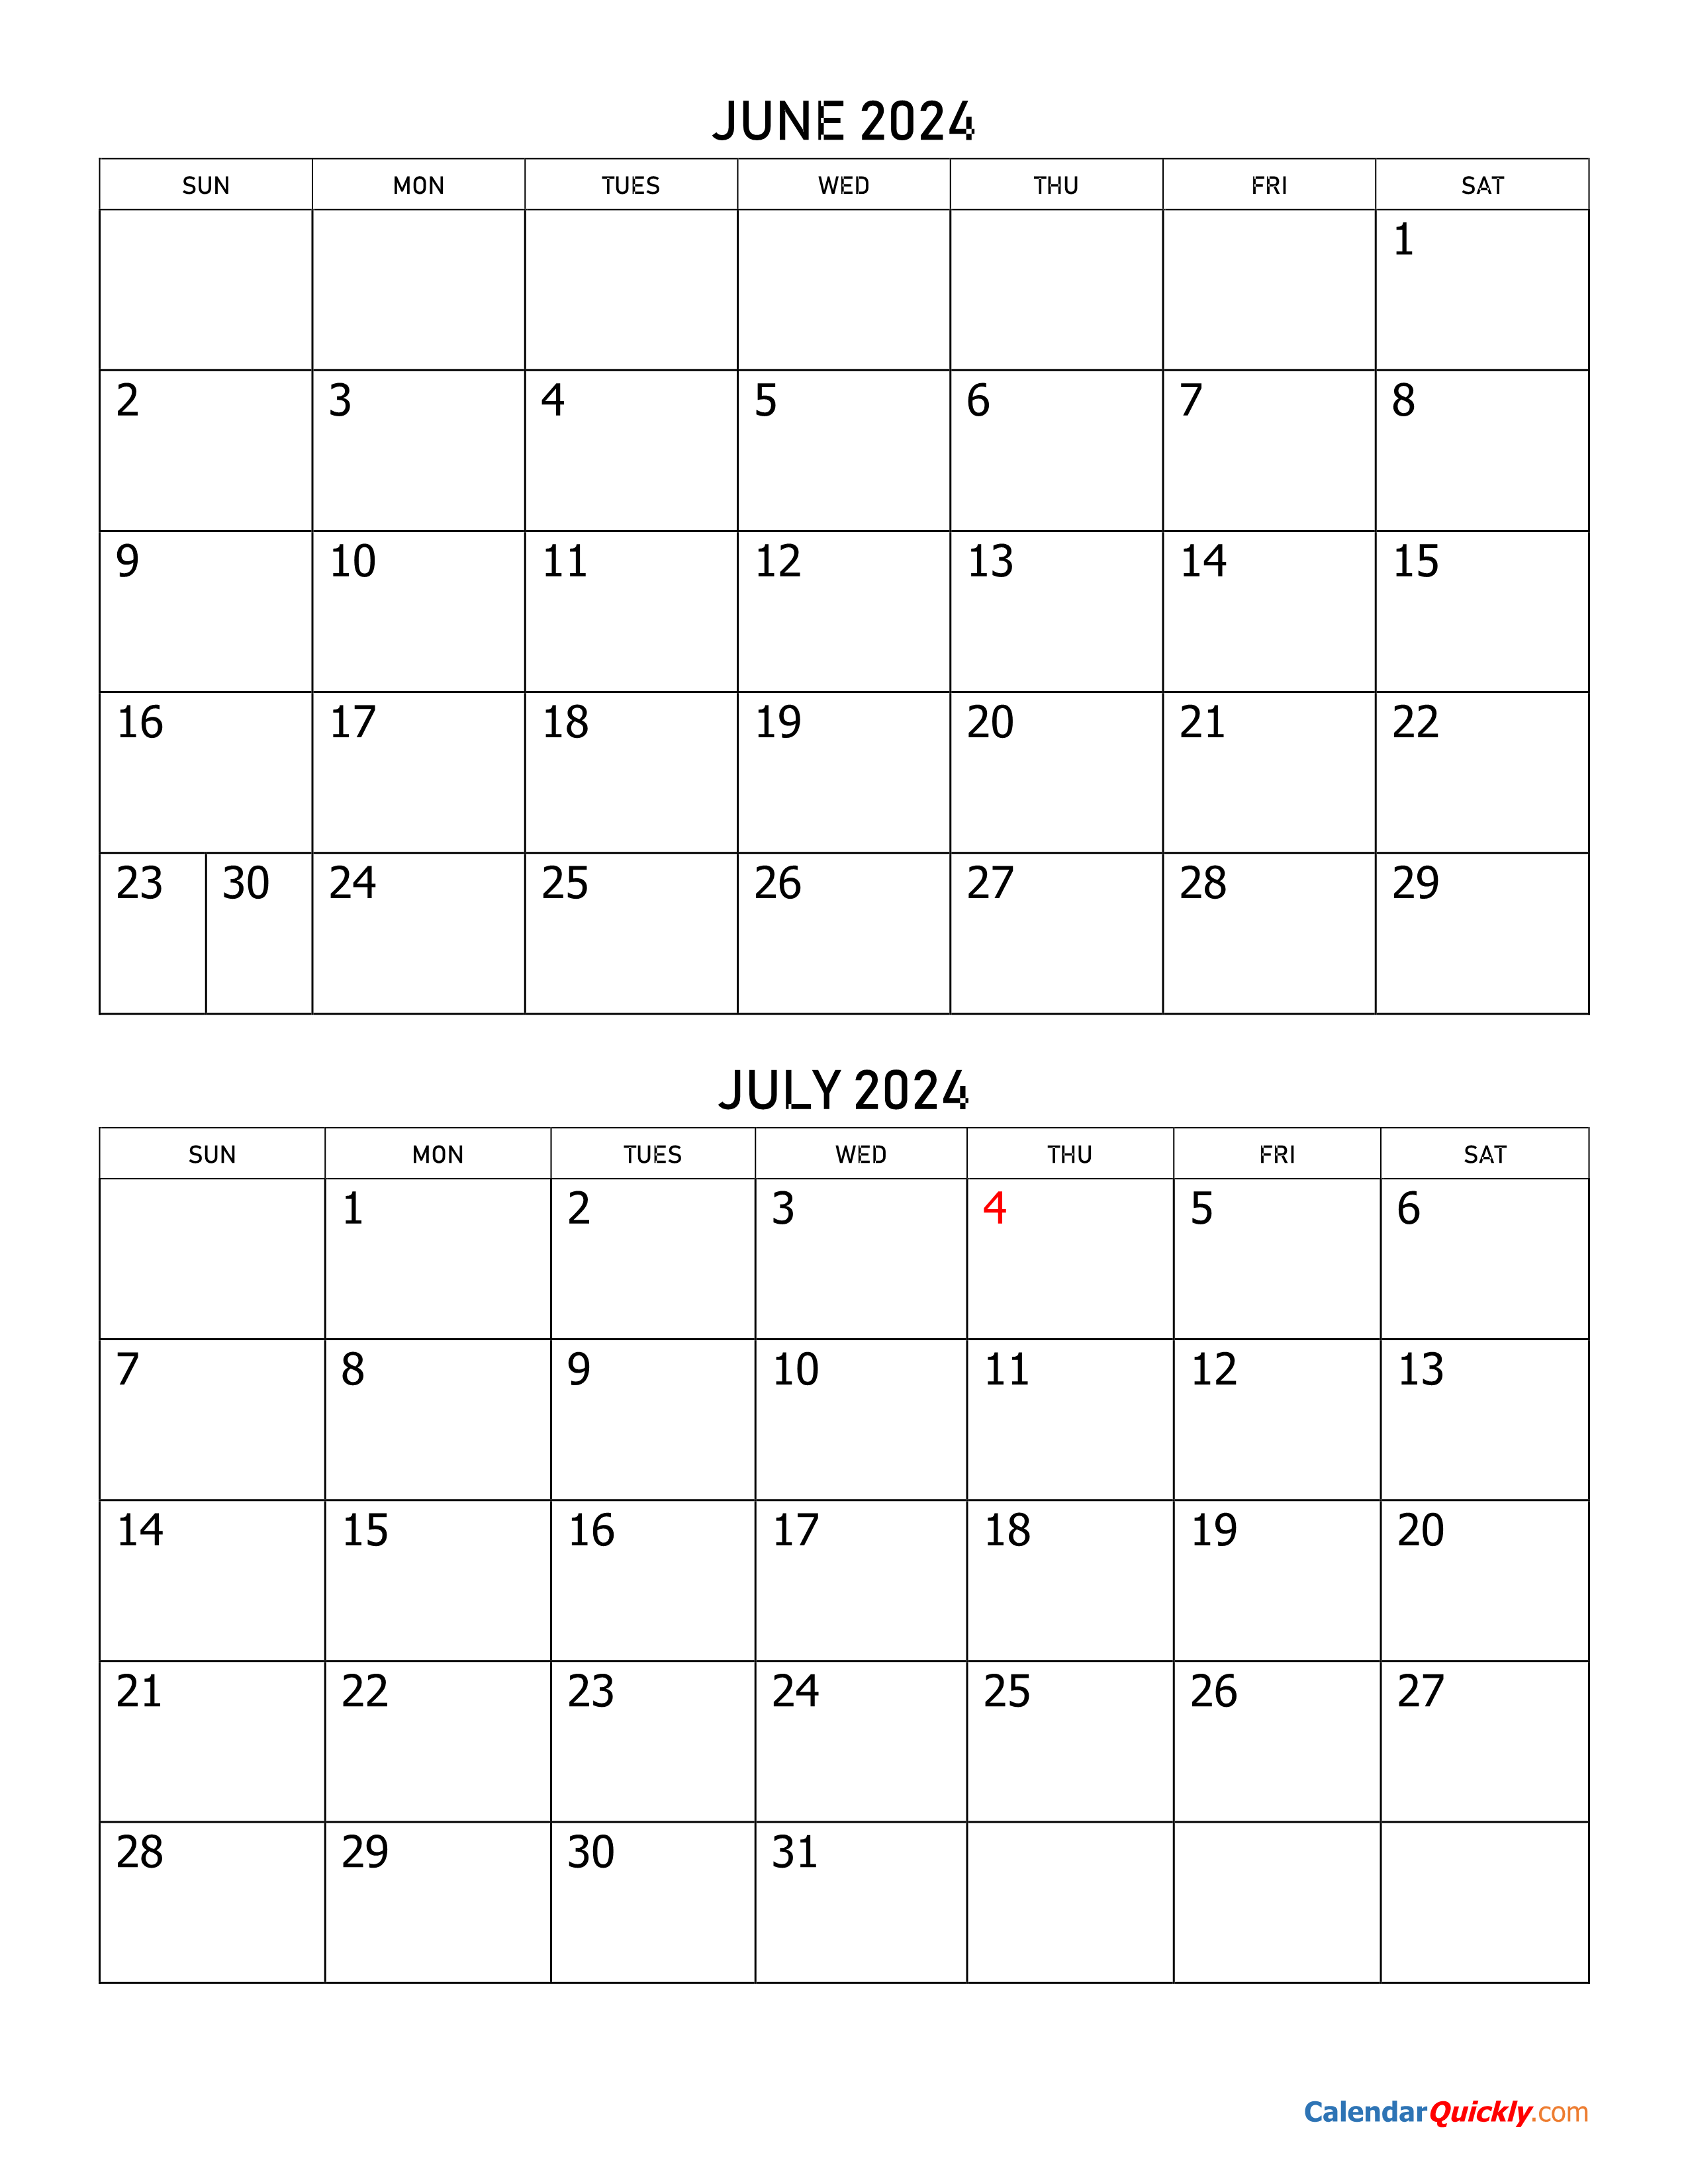 Racing Calendar July 2024 Easy To Use Calendar App 2024